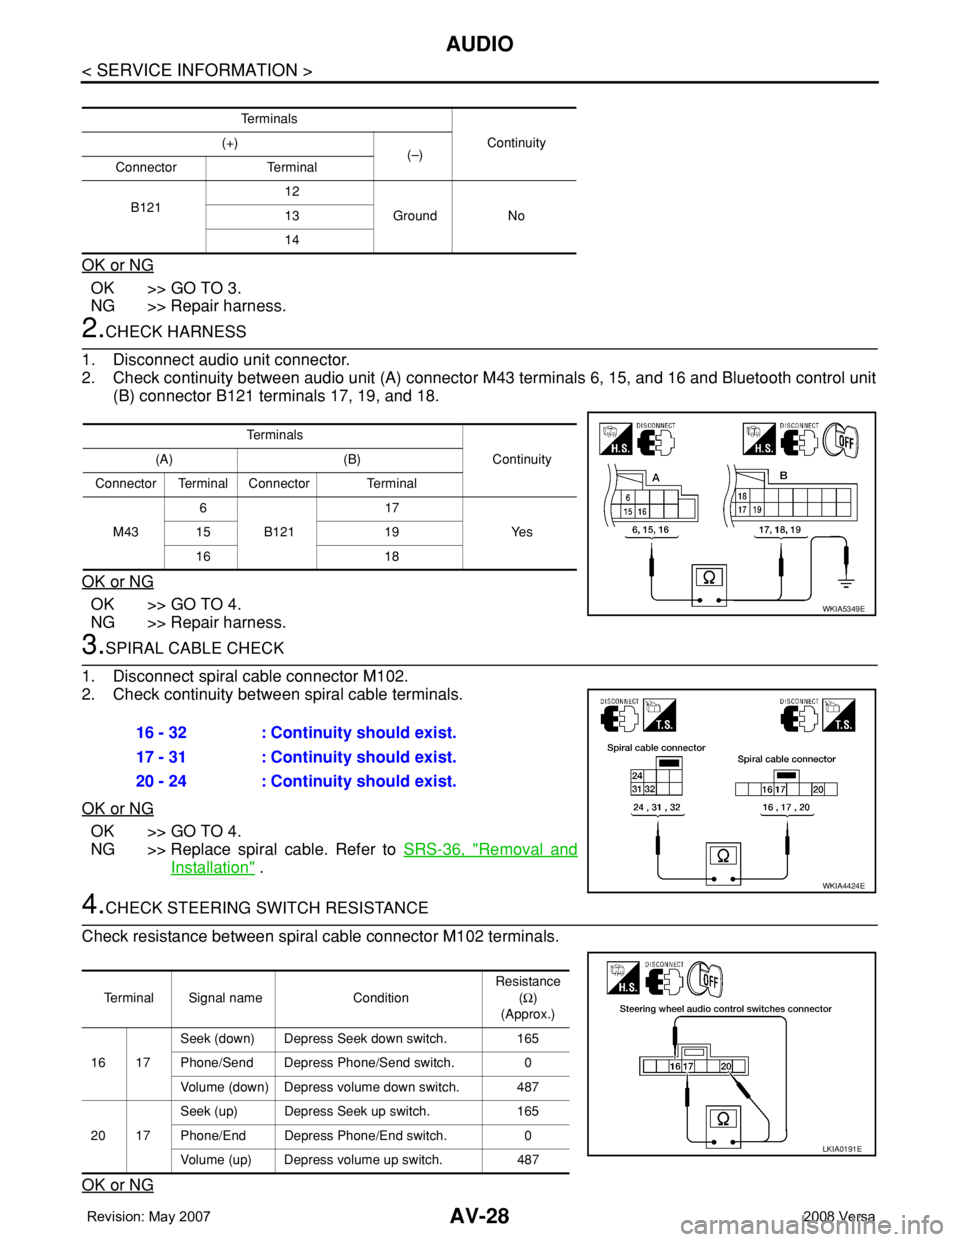 NISSAN TIIDA 2008  Service Repair Manual AV-28
< SERVICE INFORMATION >
AUDIO
OK or NG
OK >> GO TO 3.
NG >> Repair harness.
2.CHECK HARNESS
1. Disconnect audio unit connector.
2. Check continuity between audio unit (A) connector M43 terminals